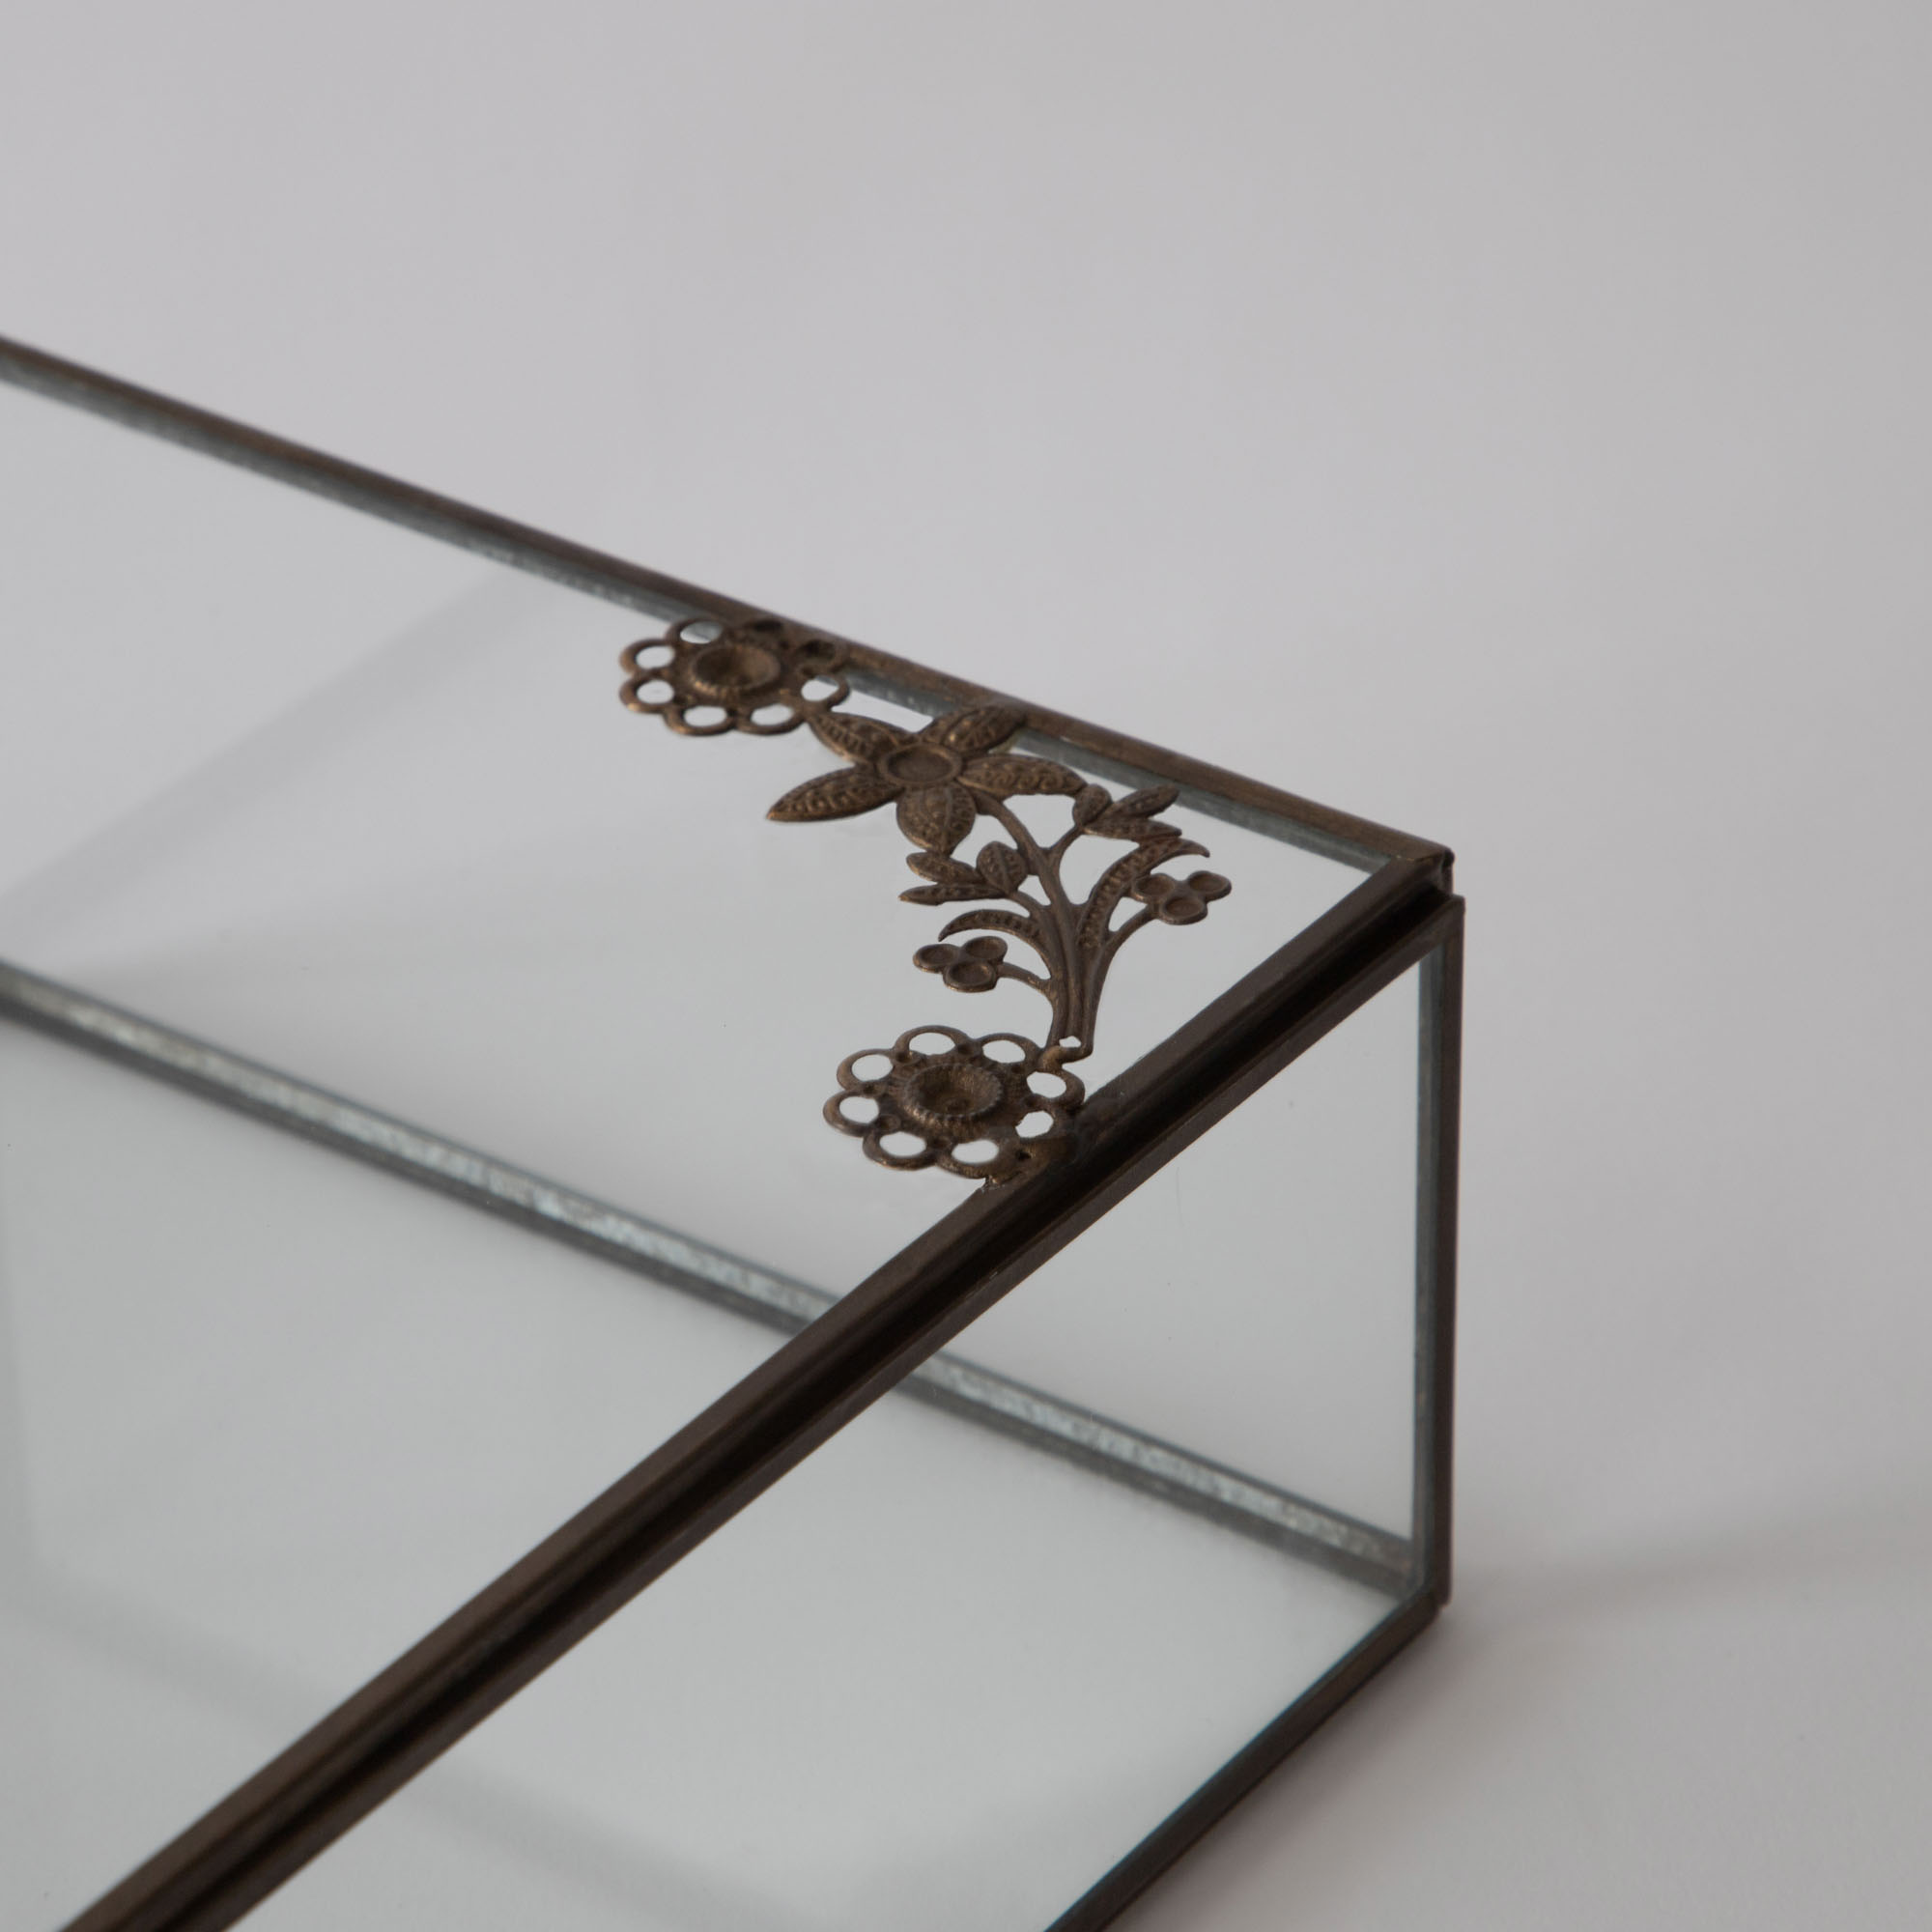 Merlyn Mesh Keepsakes Glass Box - Aged Antique Finish